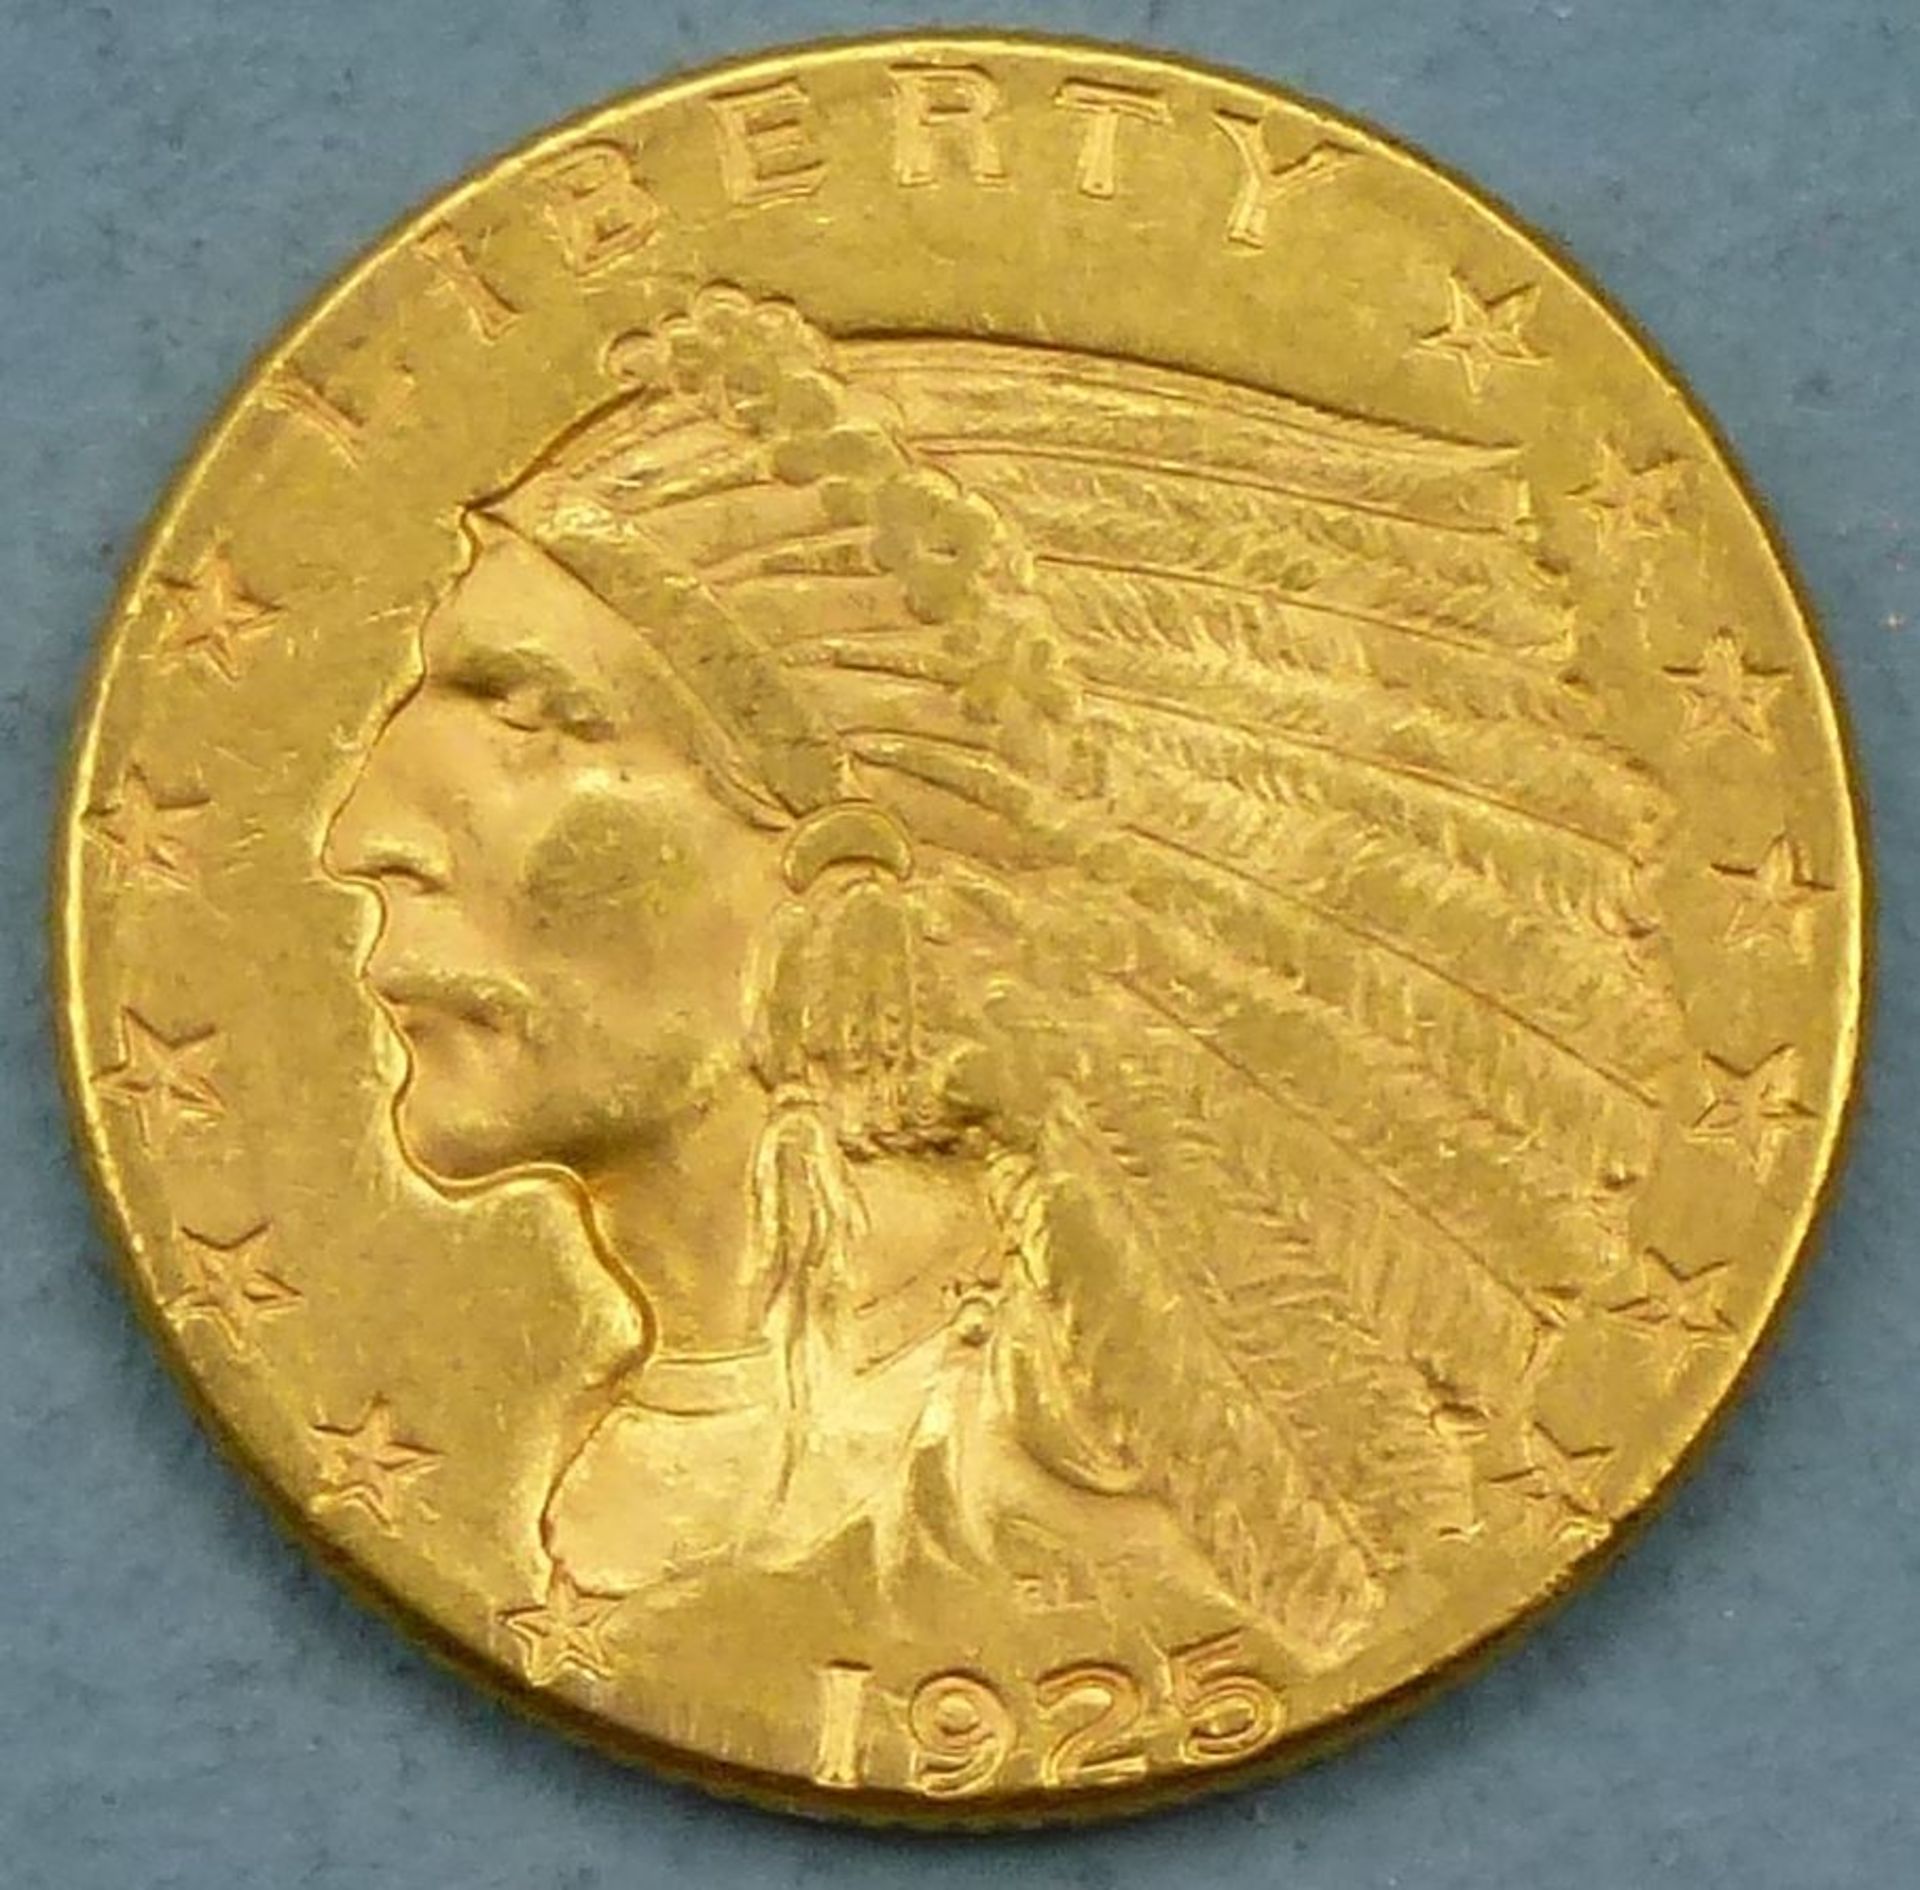 Goldmünze 2 1/2 Dollars "Indian Head", USA 1925900er, 4,15 g, guter Zustand - Bild 2 aus 2